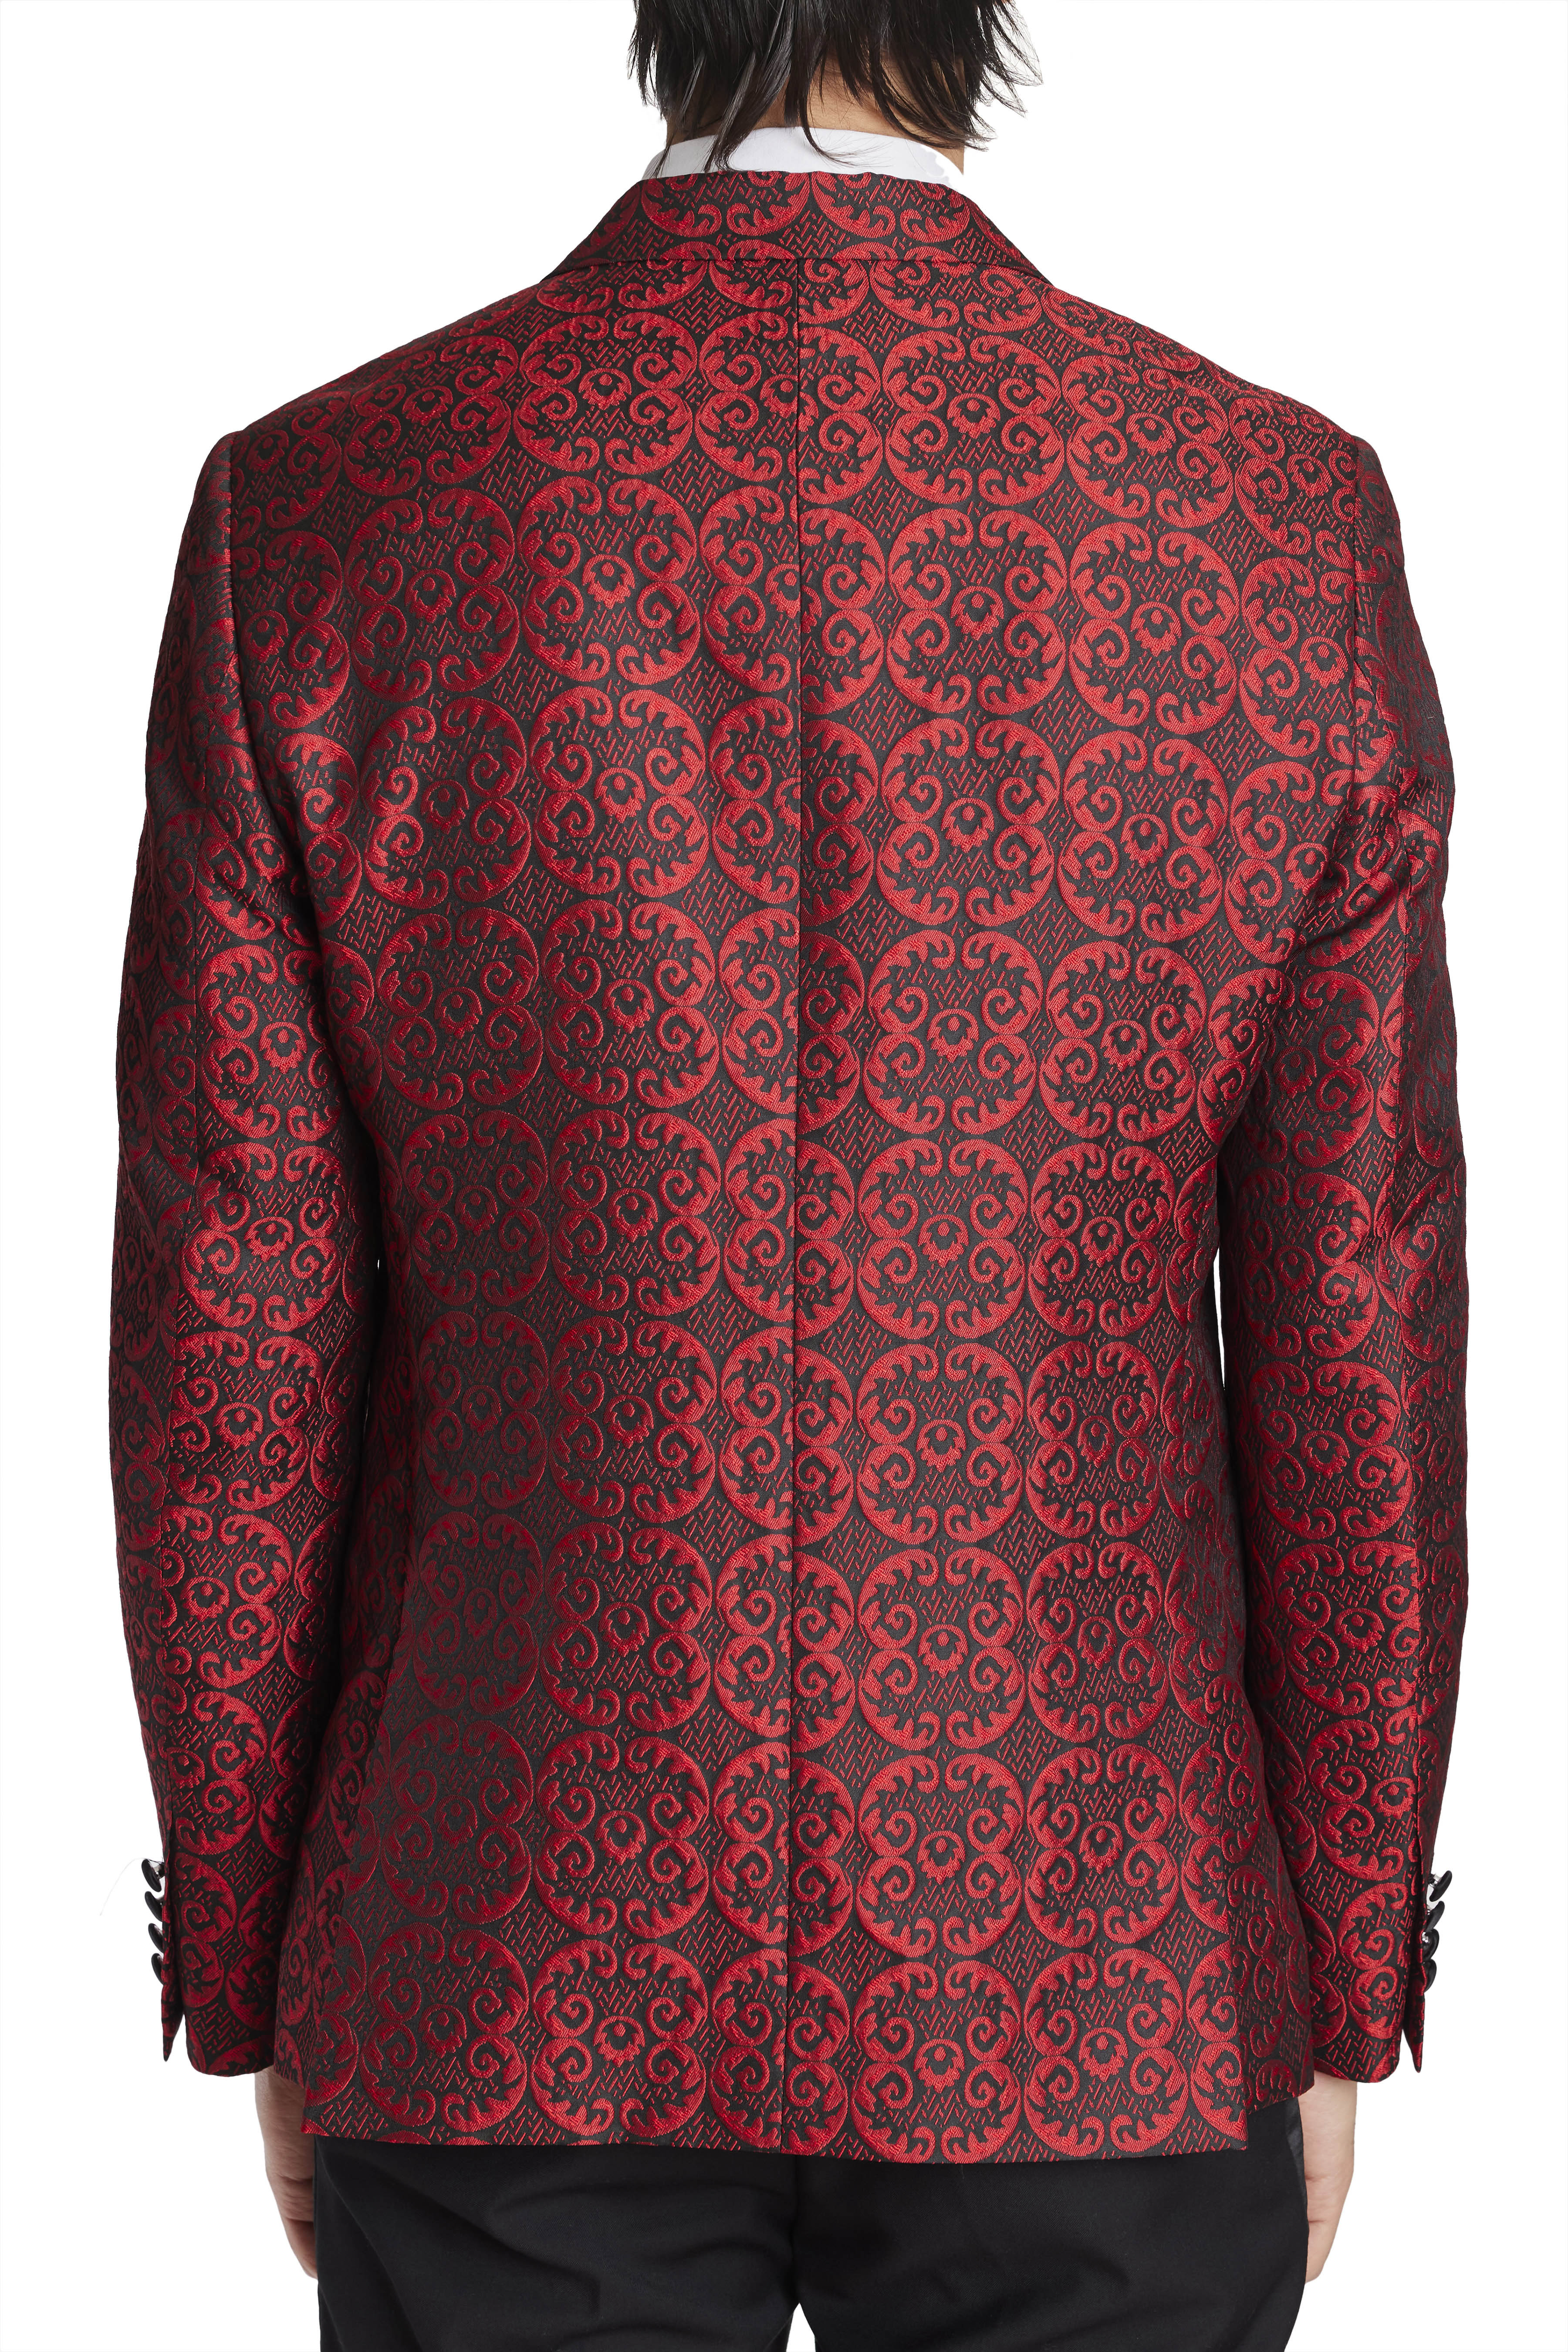 Osborne Notch Tux Jacket - slim - Red and Black